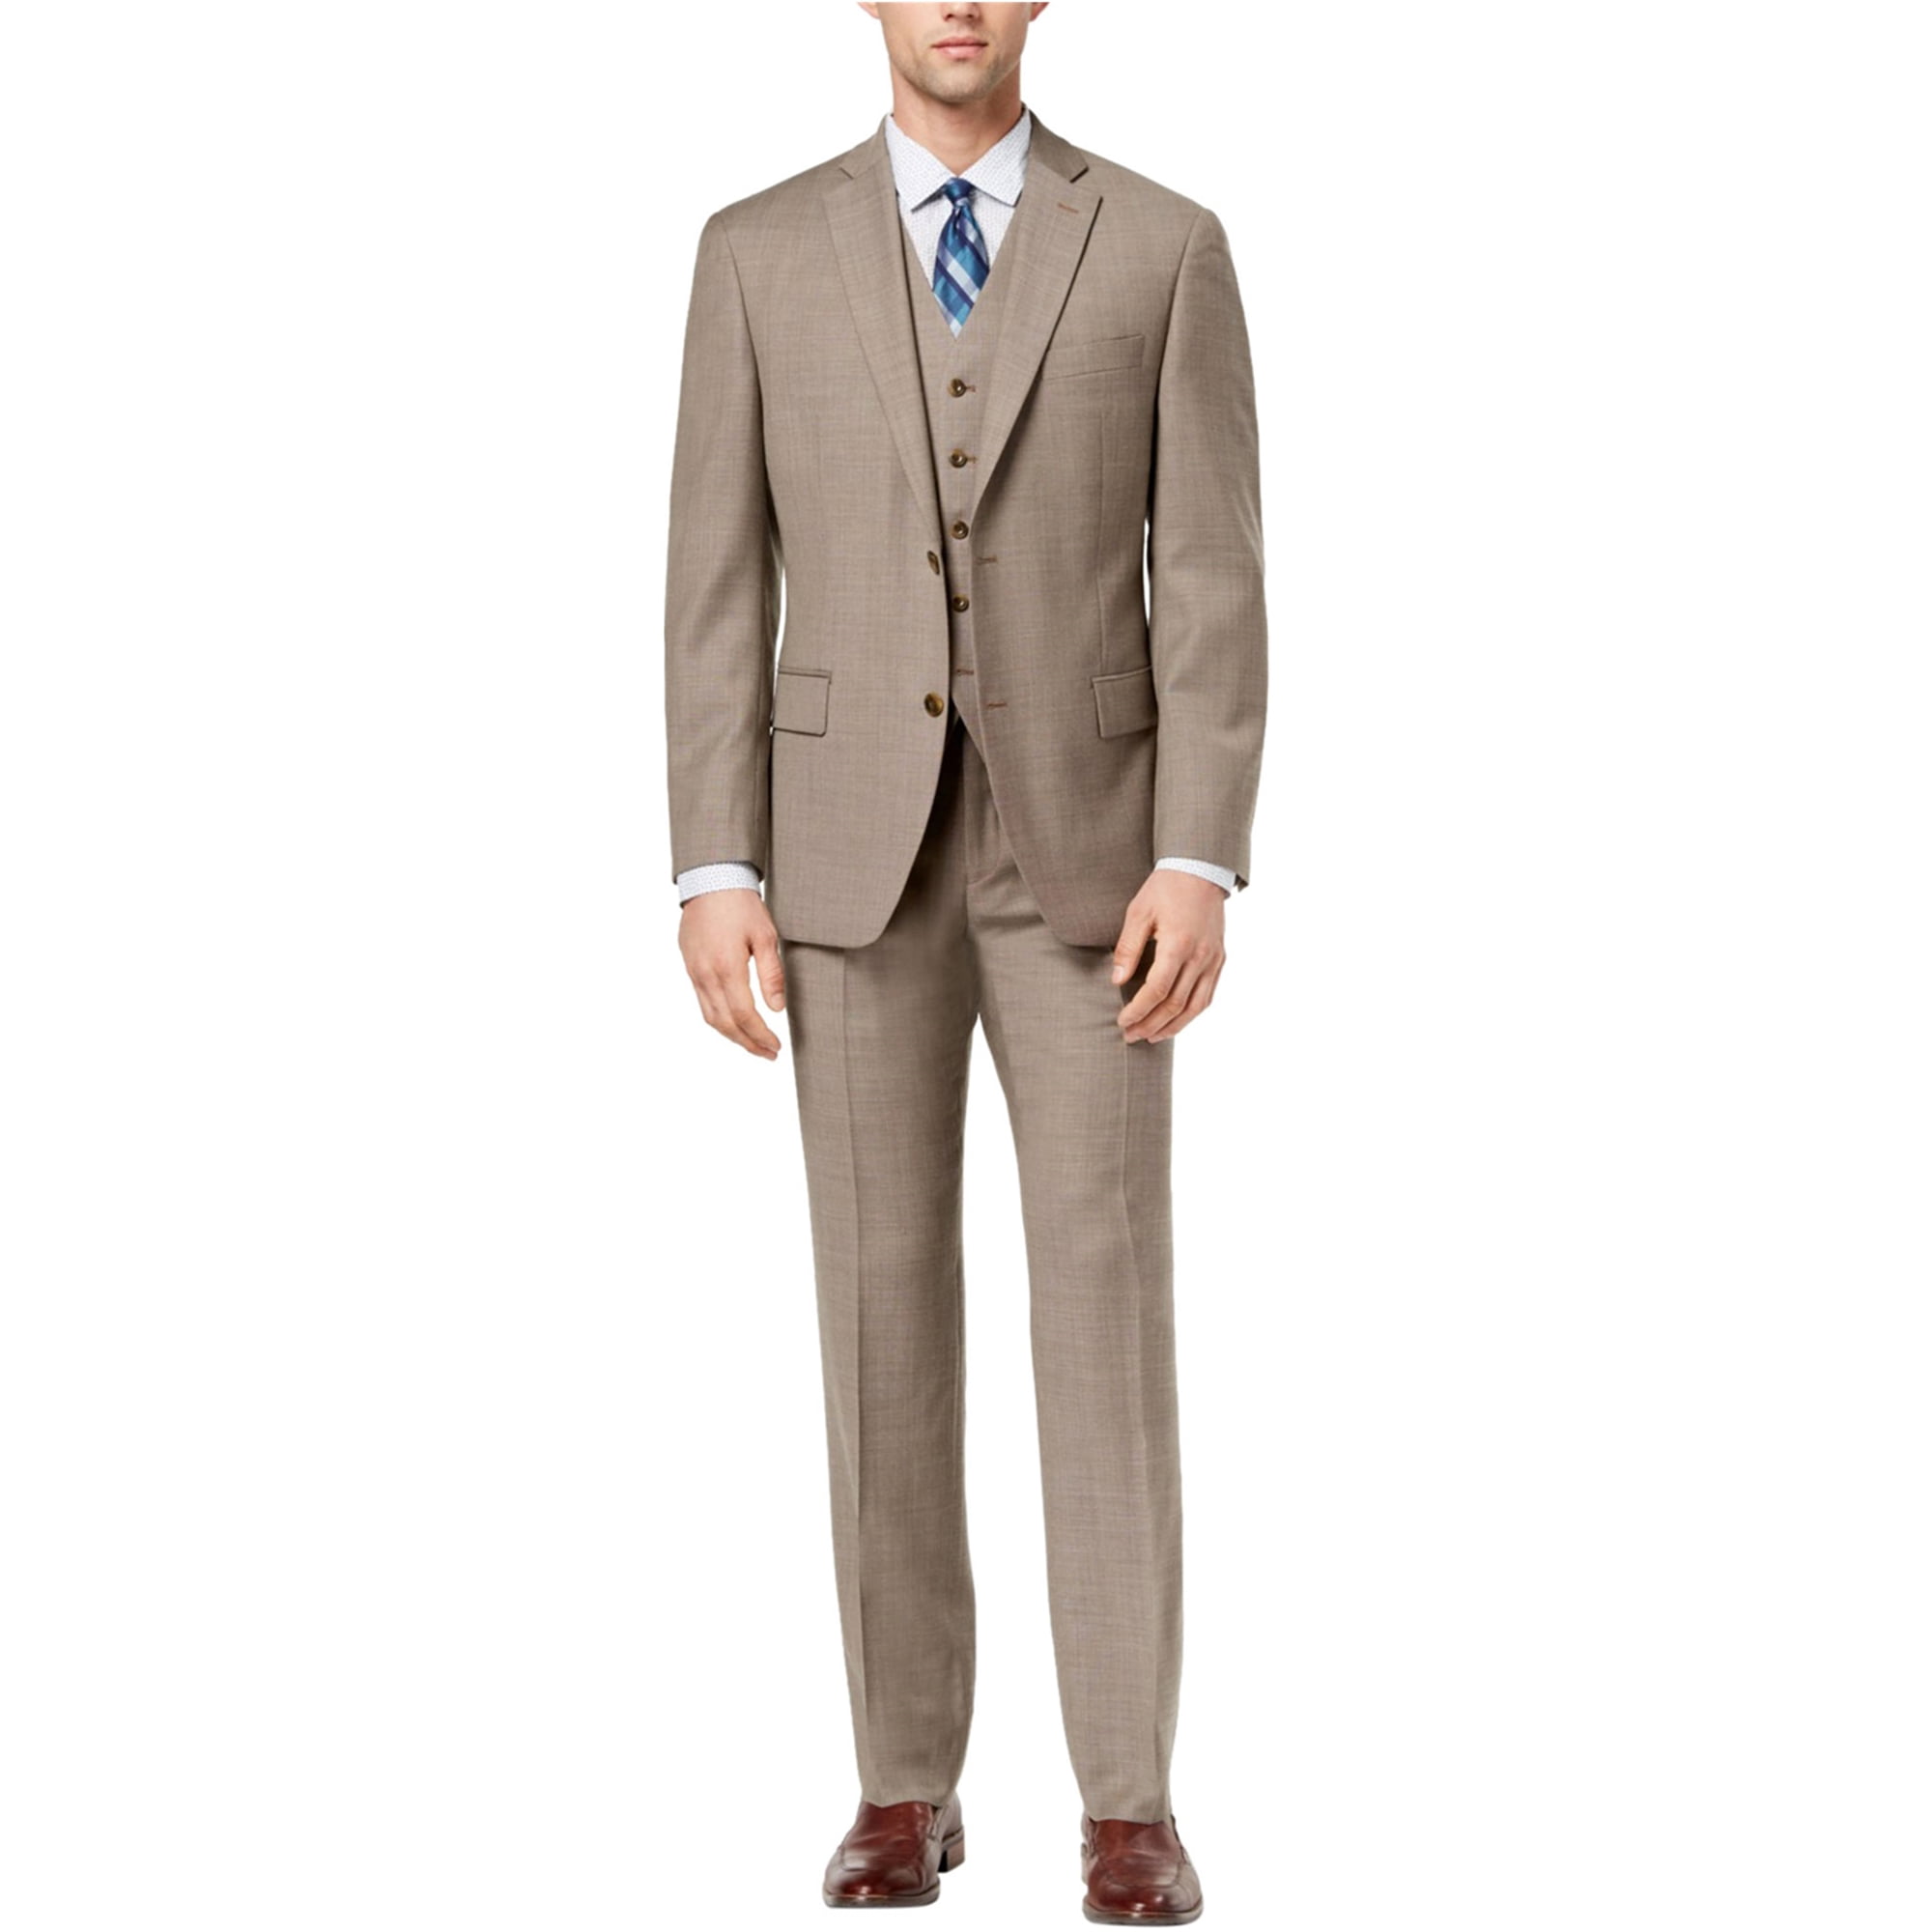 Michael Kors Mens 3 Piece Two Button Formal Suit brown 48/Unfinished Walmart.com